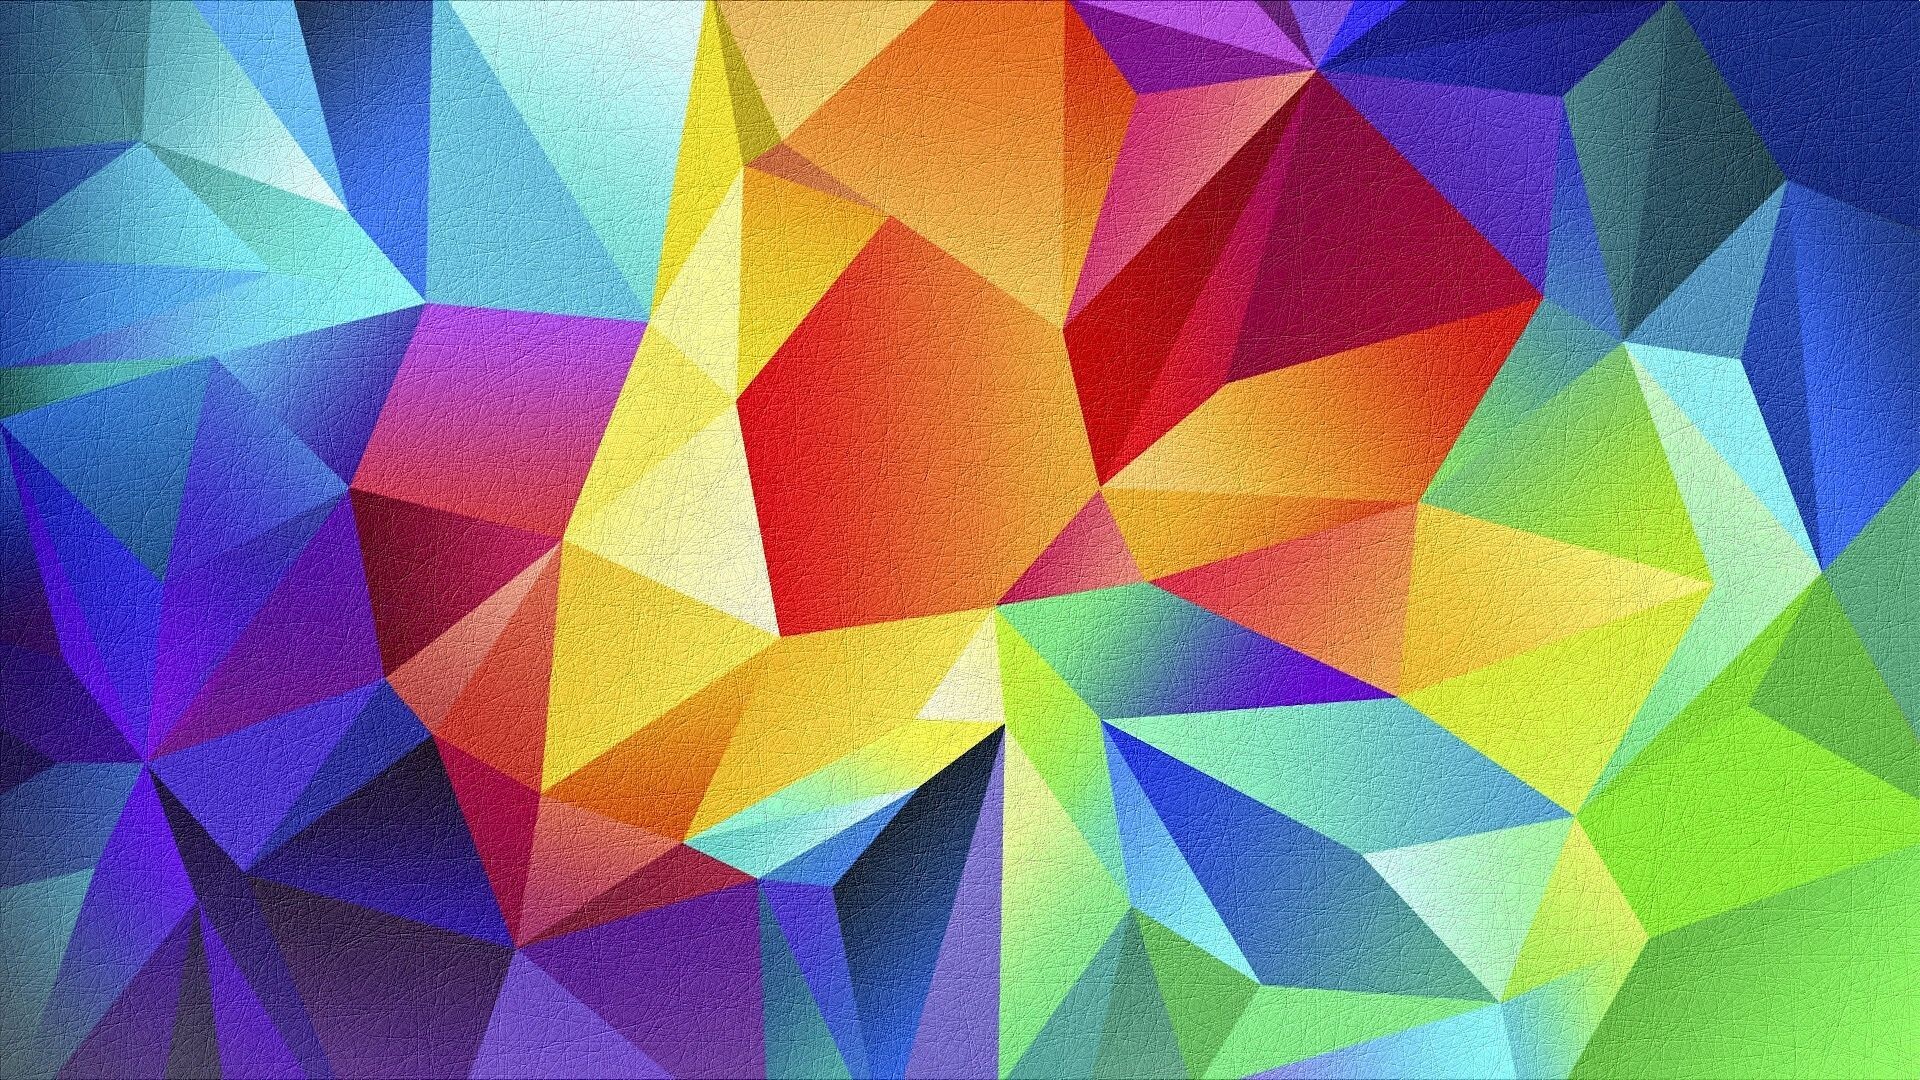 Geometry: Digital mosaic, Regular shapes, Multicolored polygons. 1920x1080 Full HD Wallpaper.